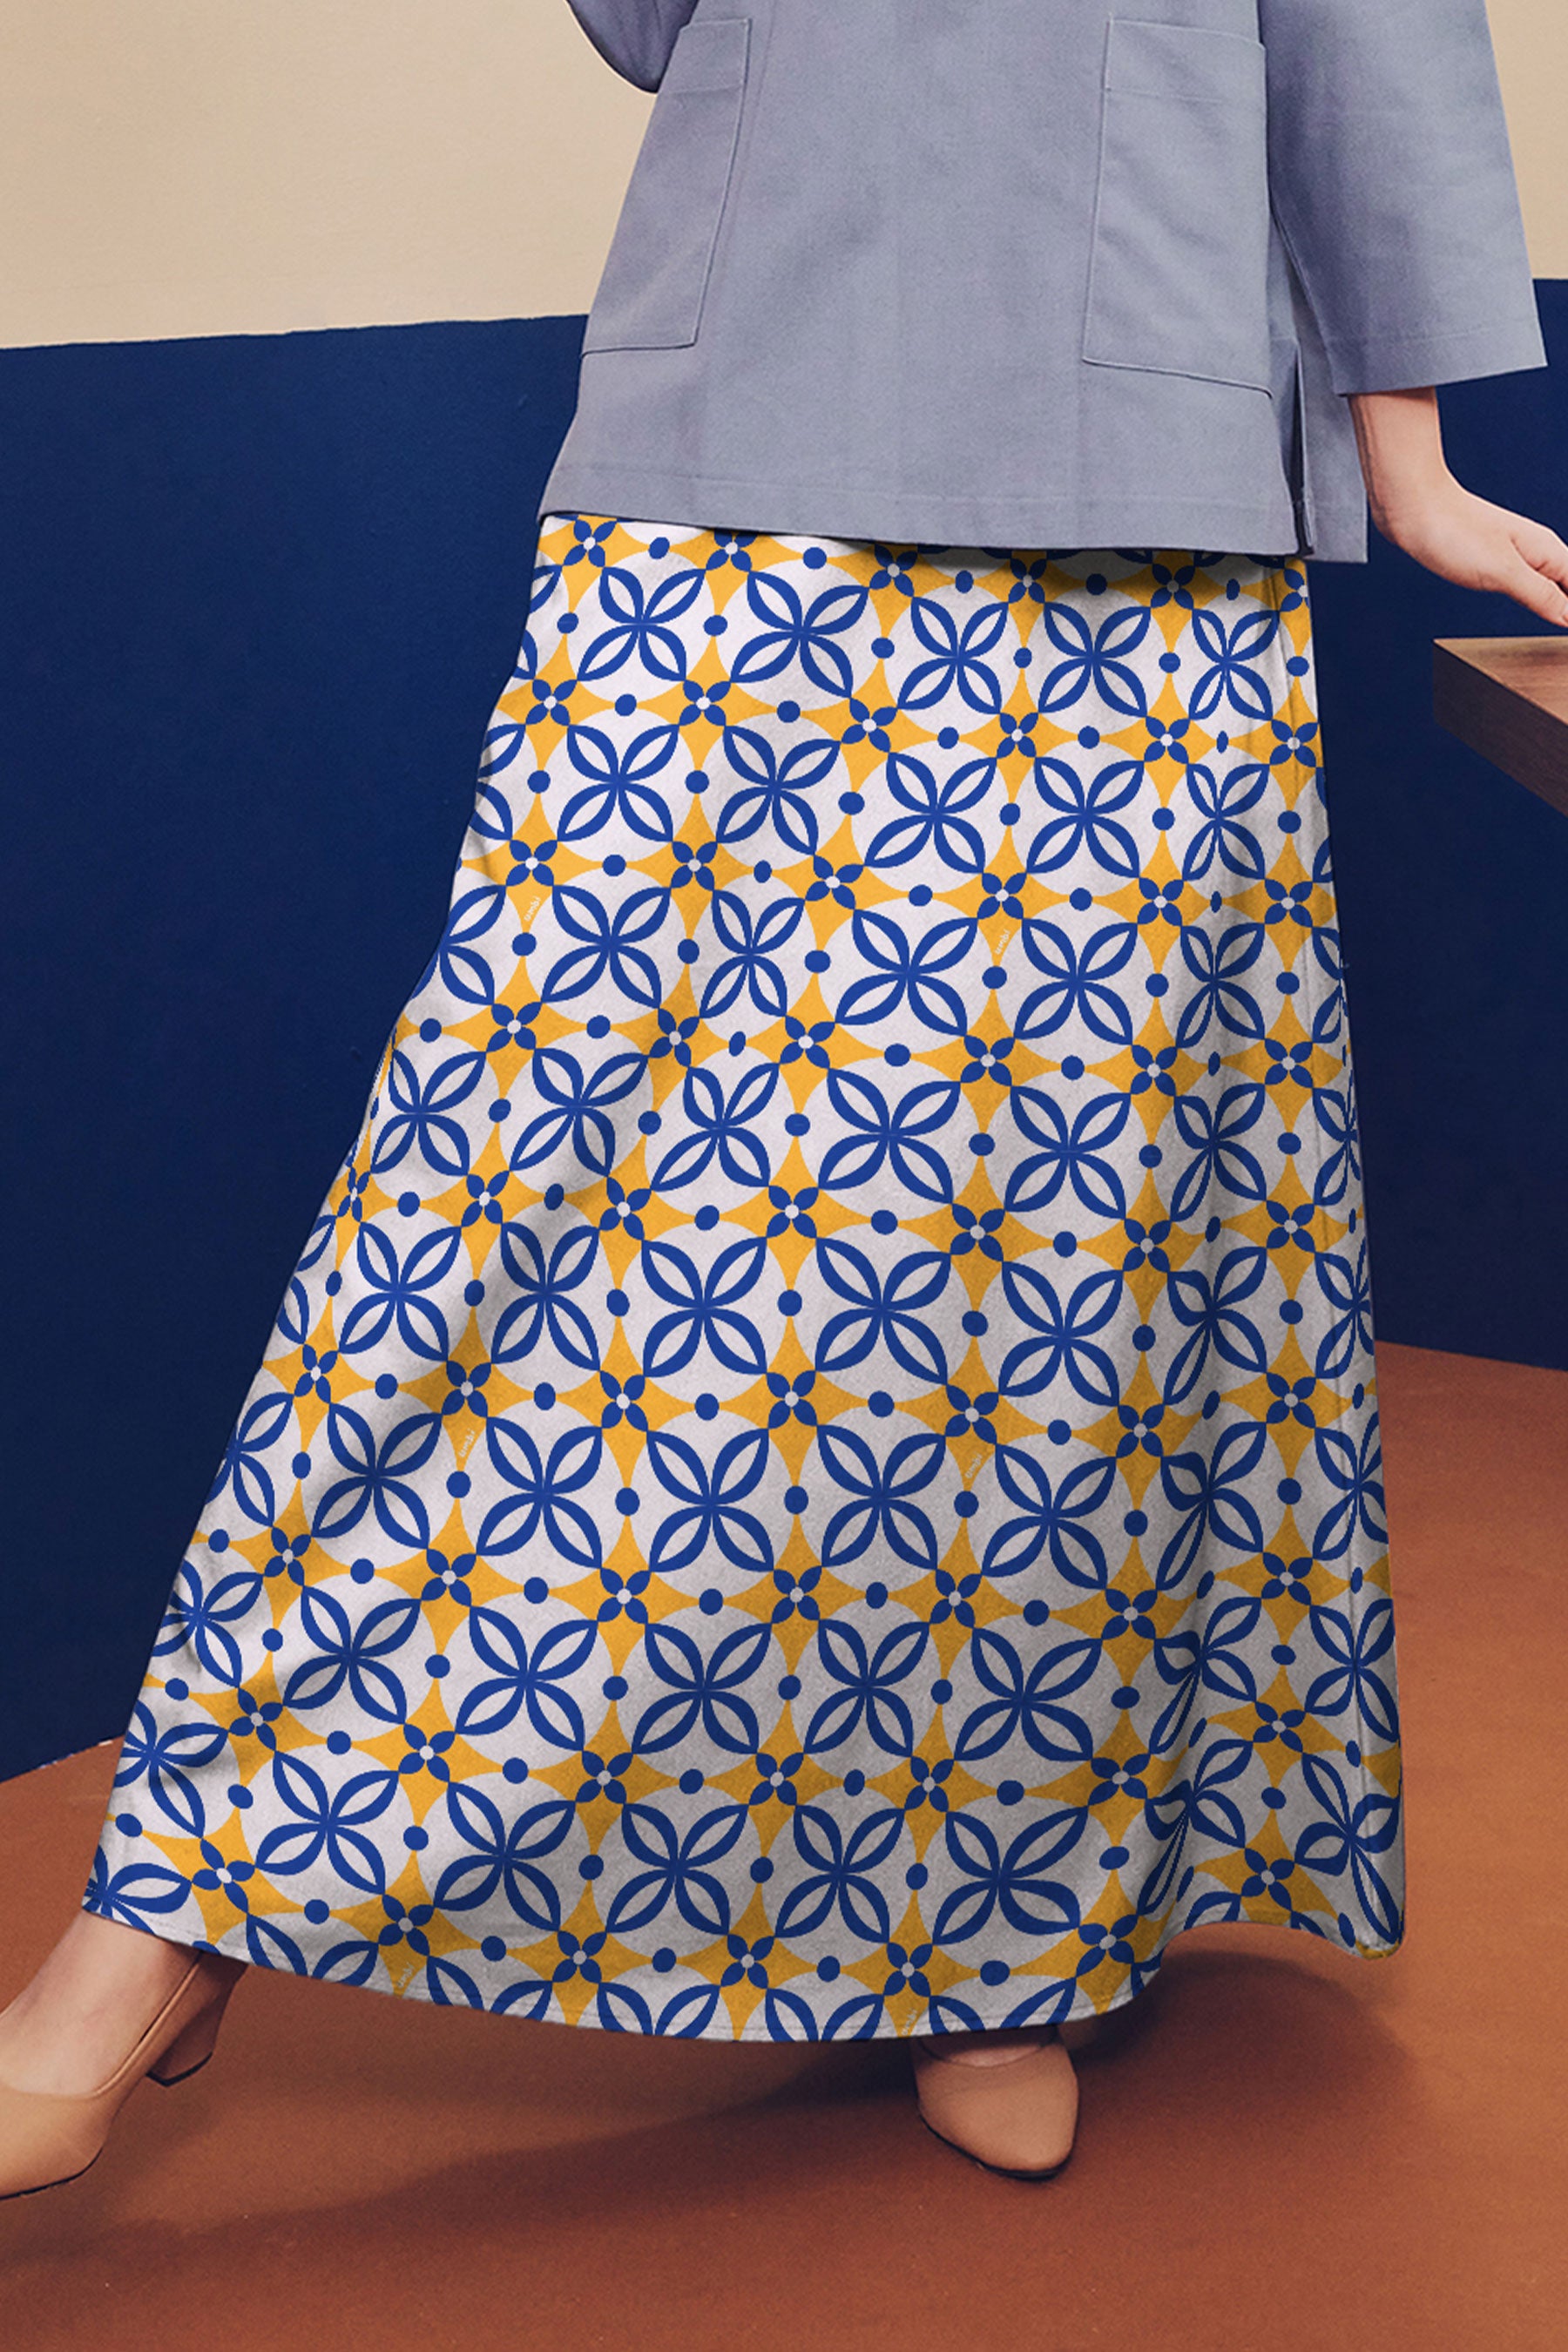 baju raya family sedondon adult woman classic skirt popcorn print